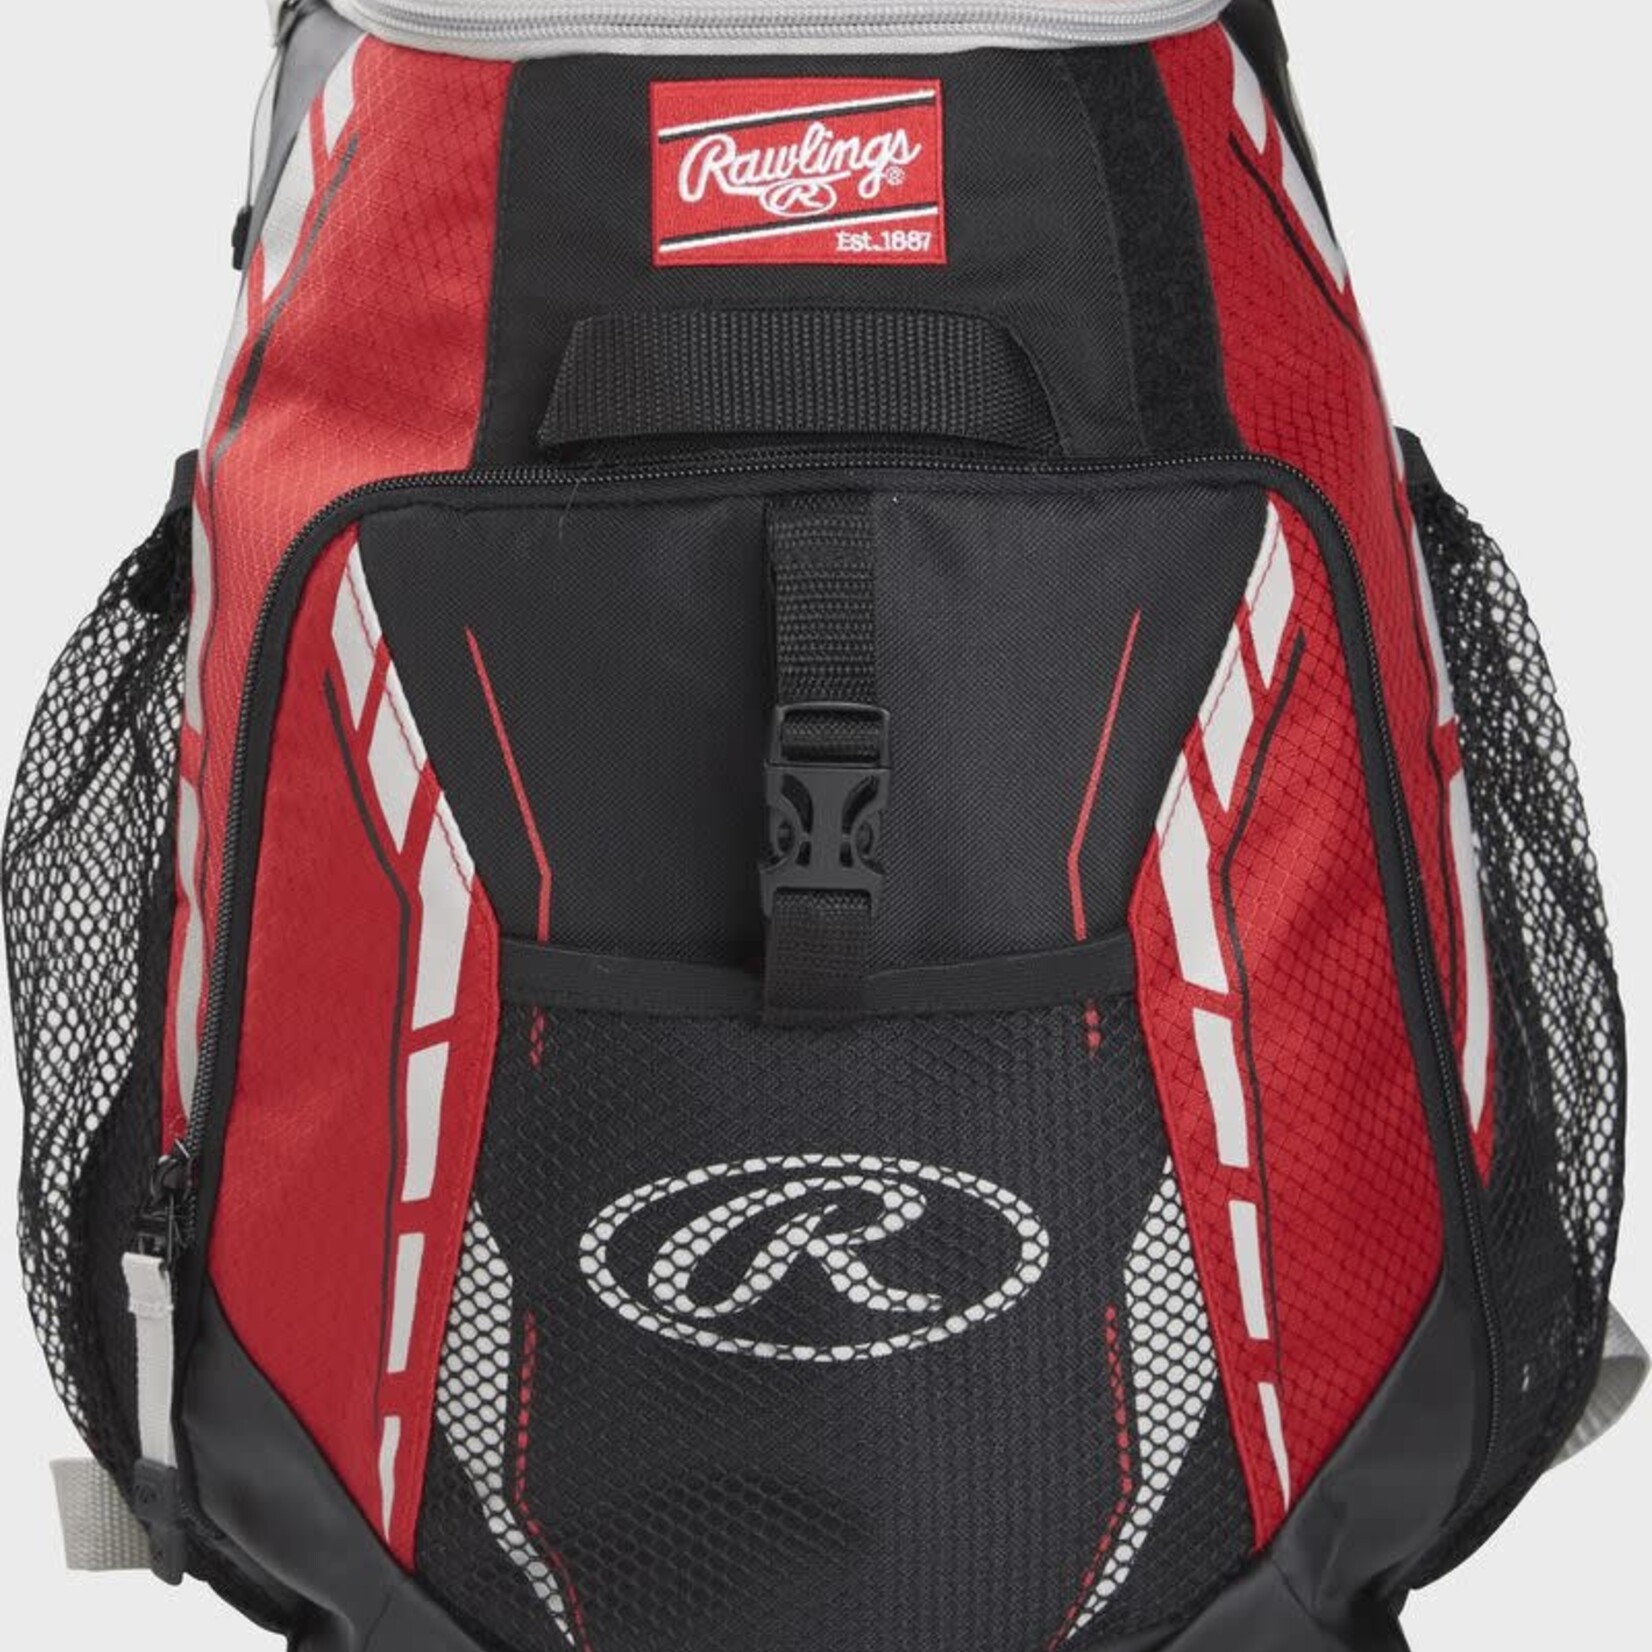 Rawlings Rawlings Baseball Bag, Players Backpack Youth